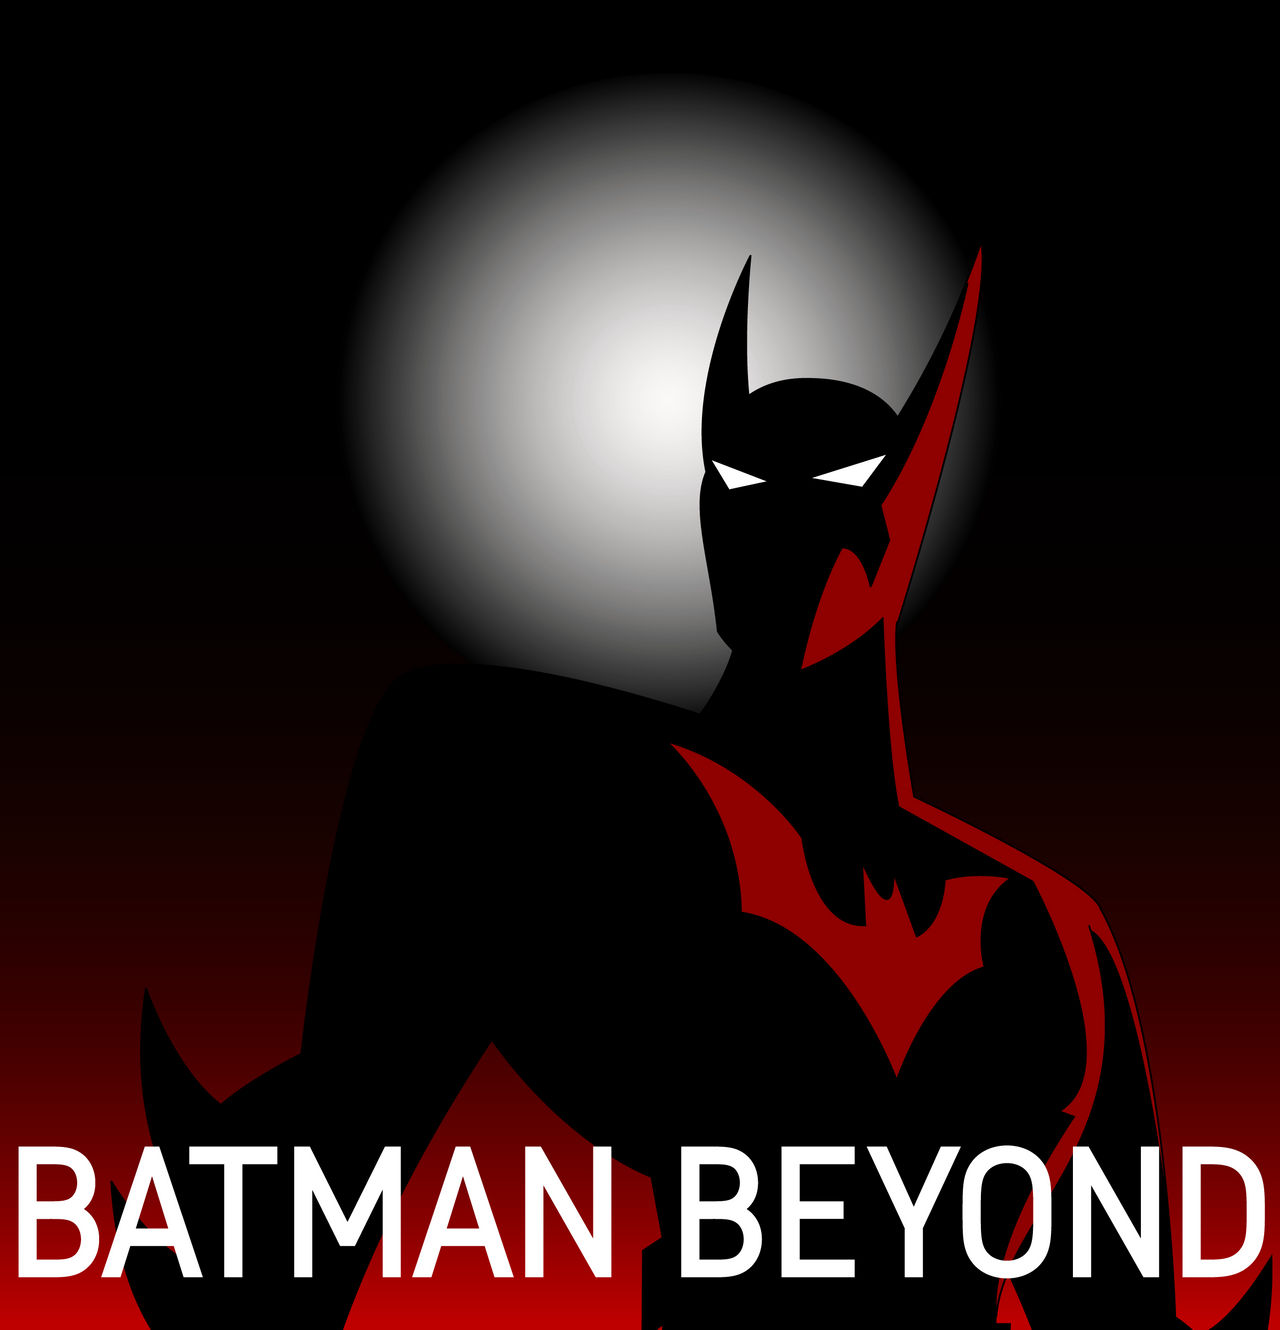 BATMAN BEYOND POSTER by DOMREP1 on DeviantArt